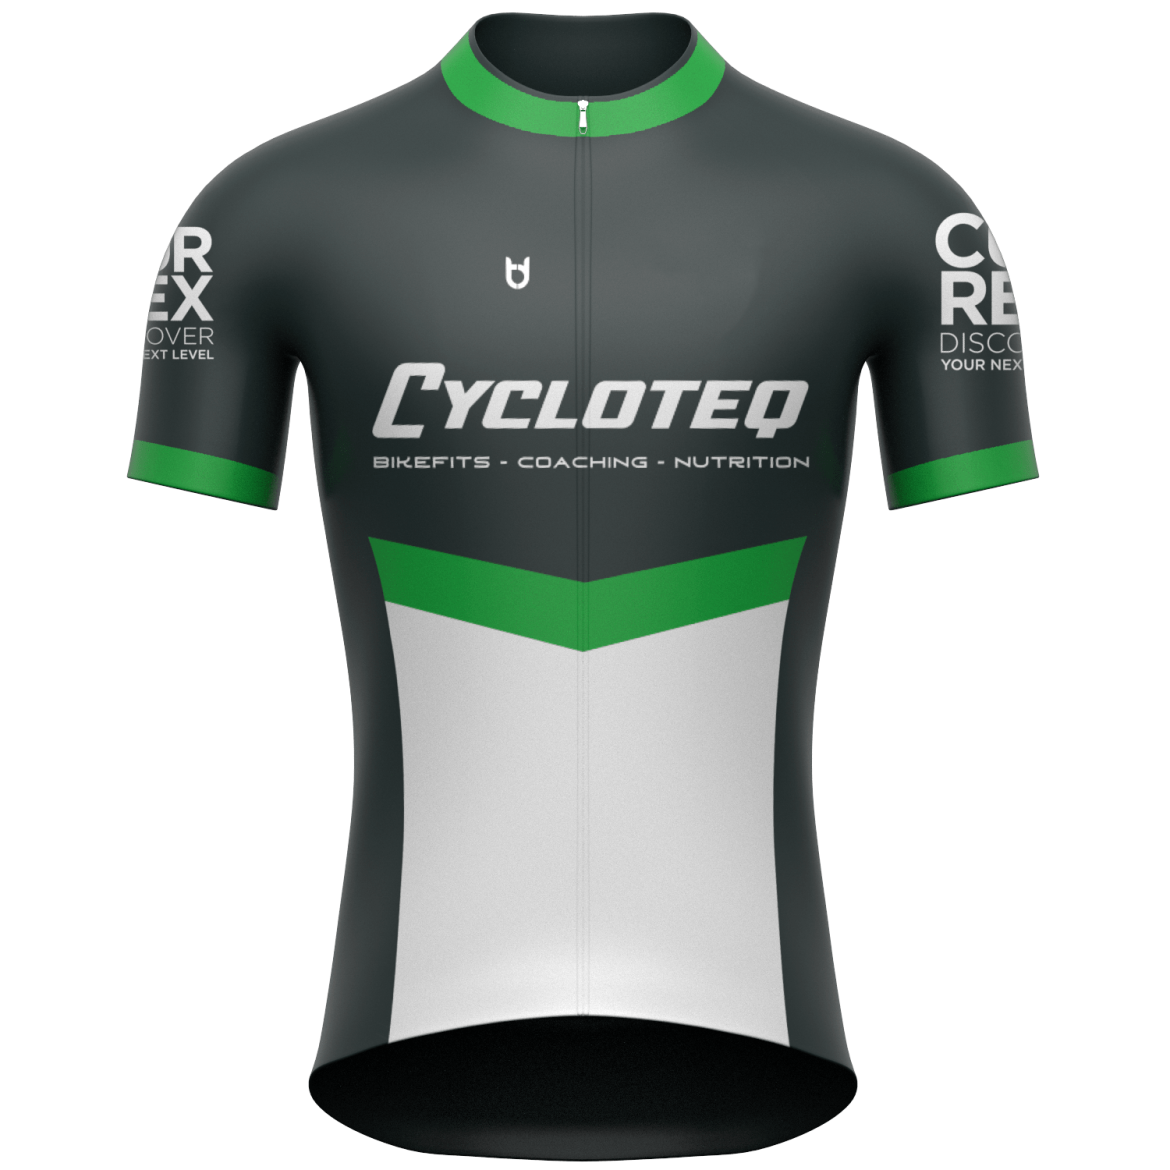 Cycloteq cycling jersey custom made